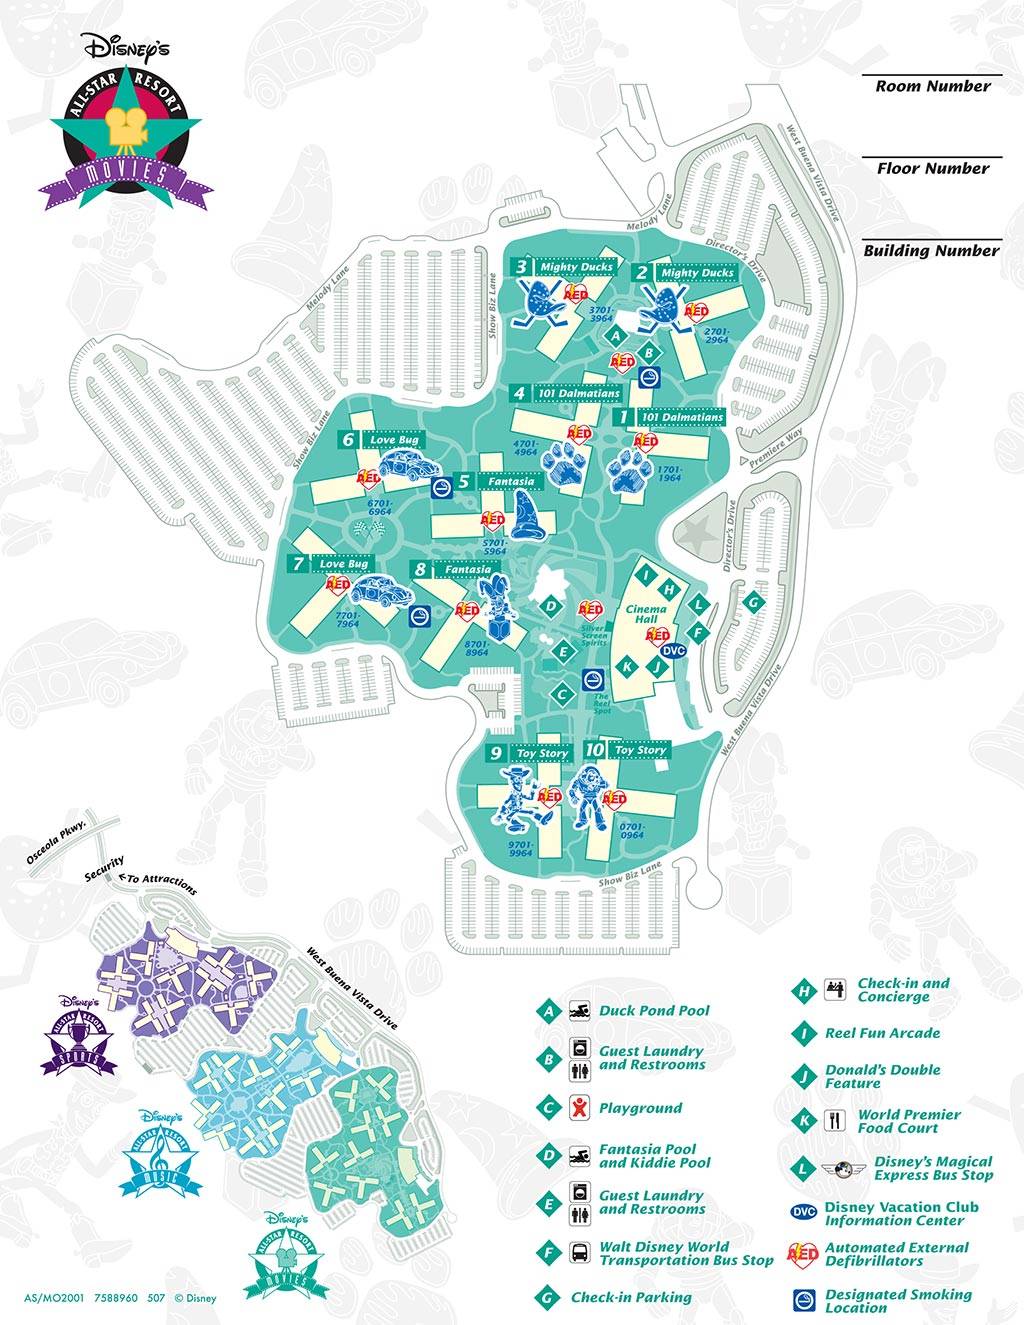 Disney's All-Star Movies Resort map